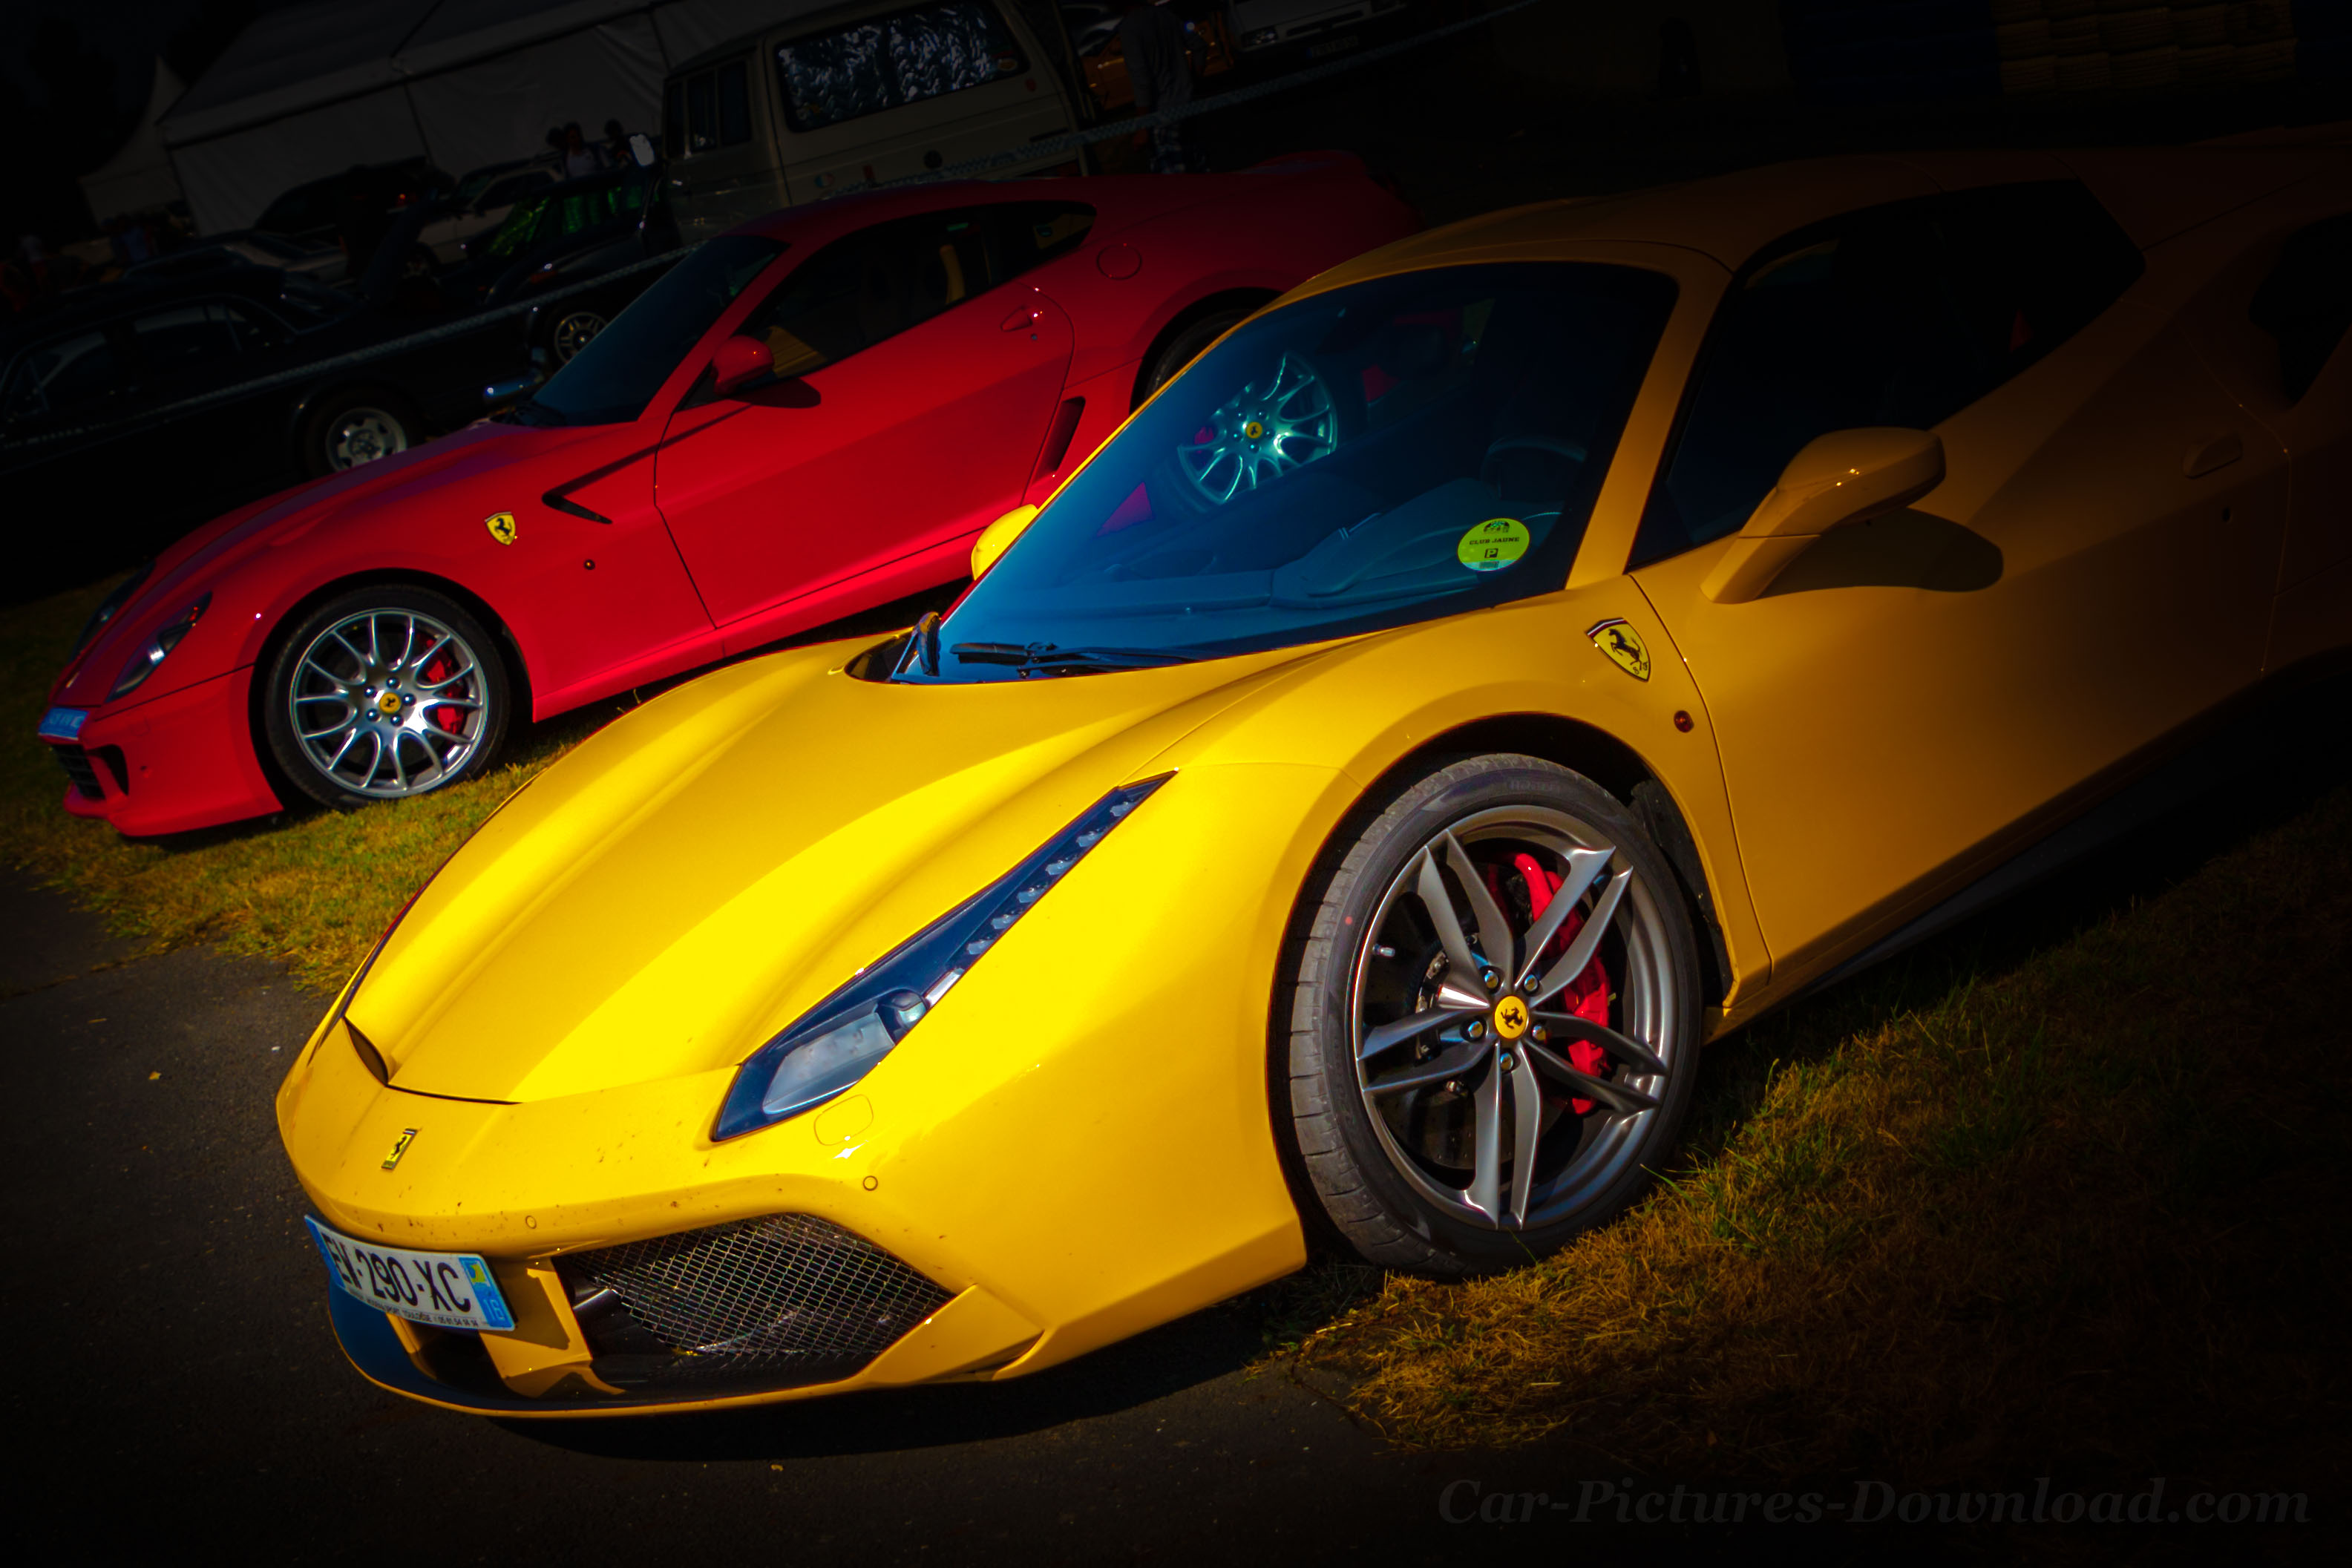 Ferrari Cars Image New Photos And Best Wallpaper